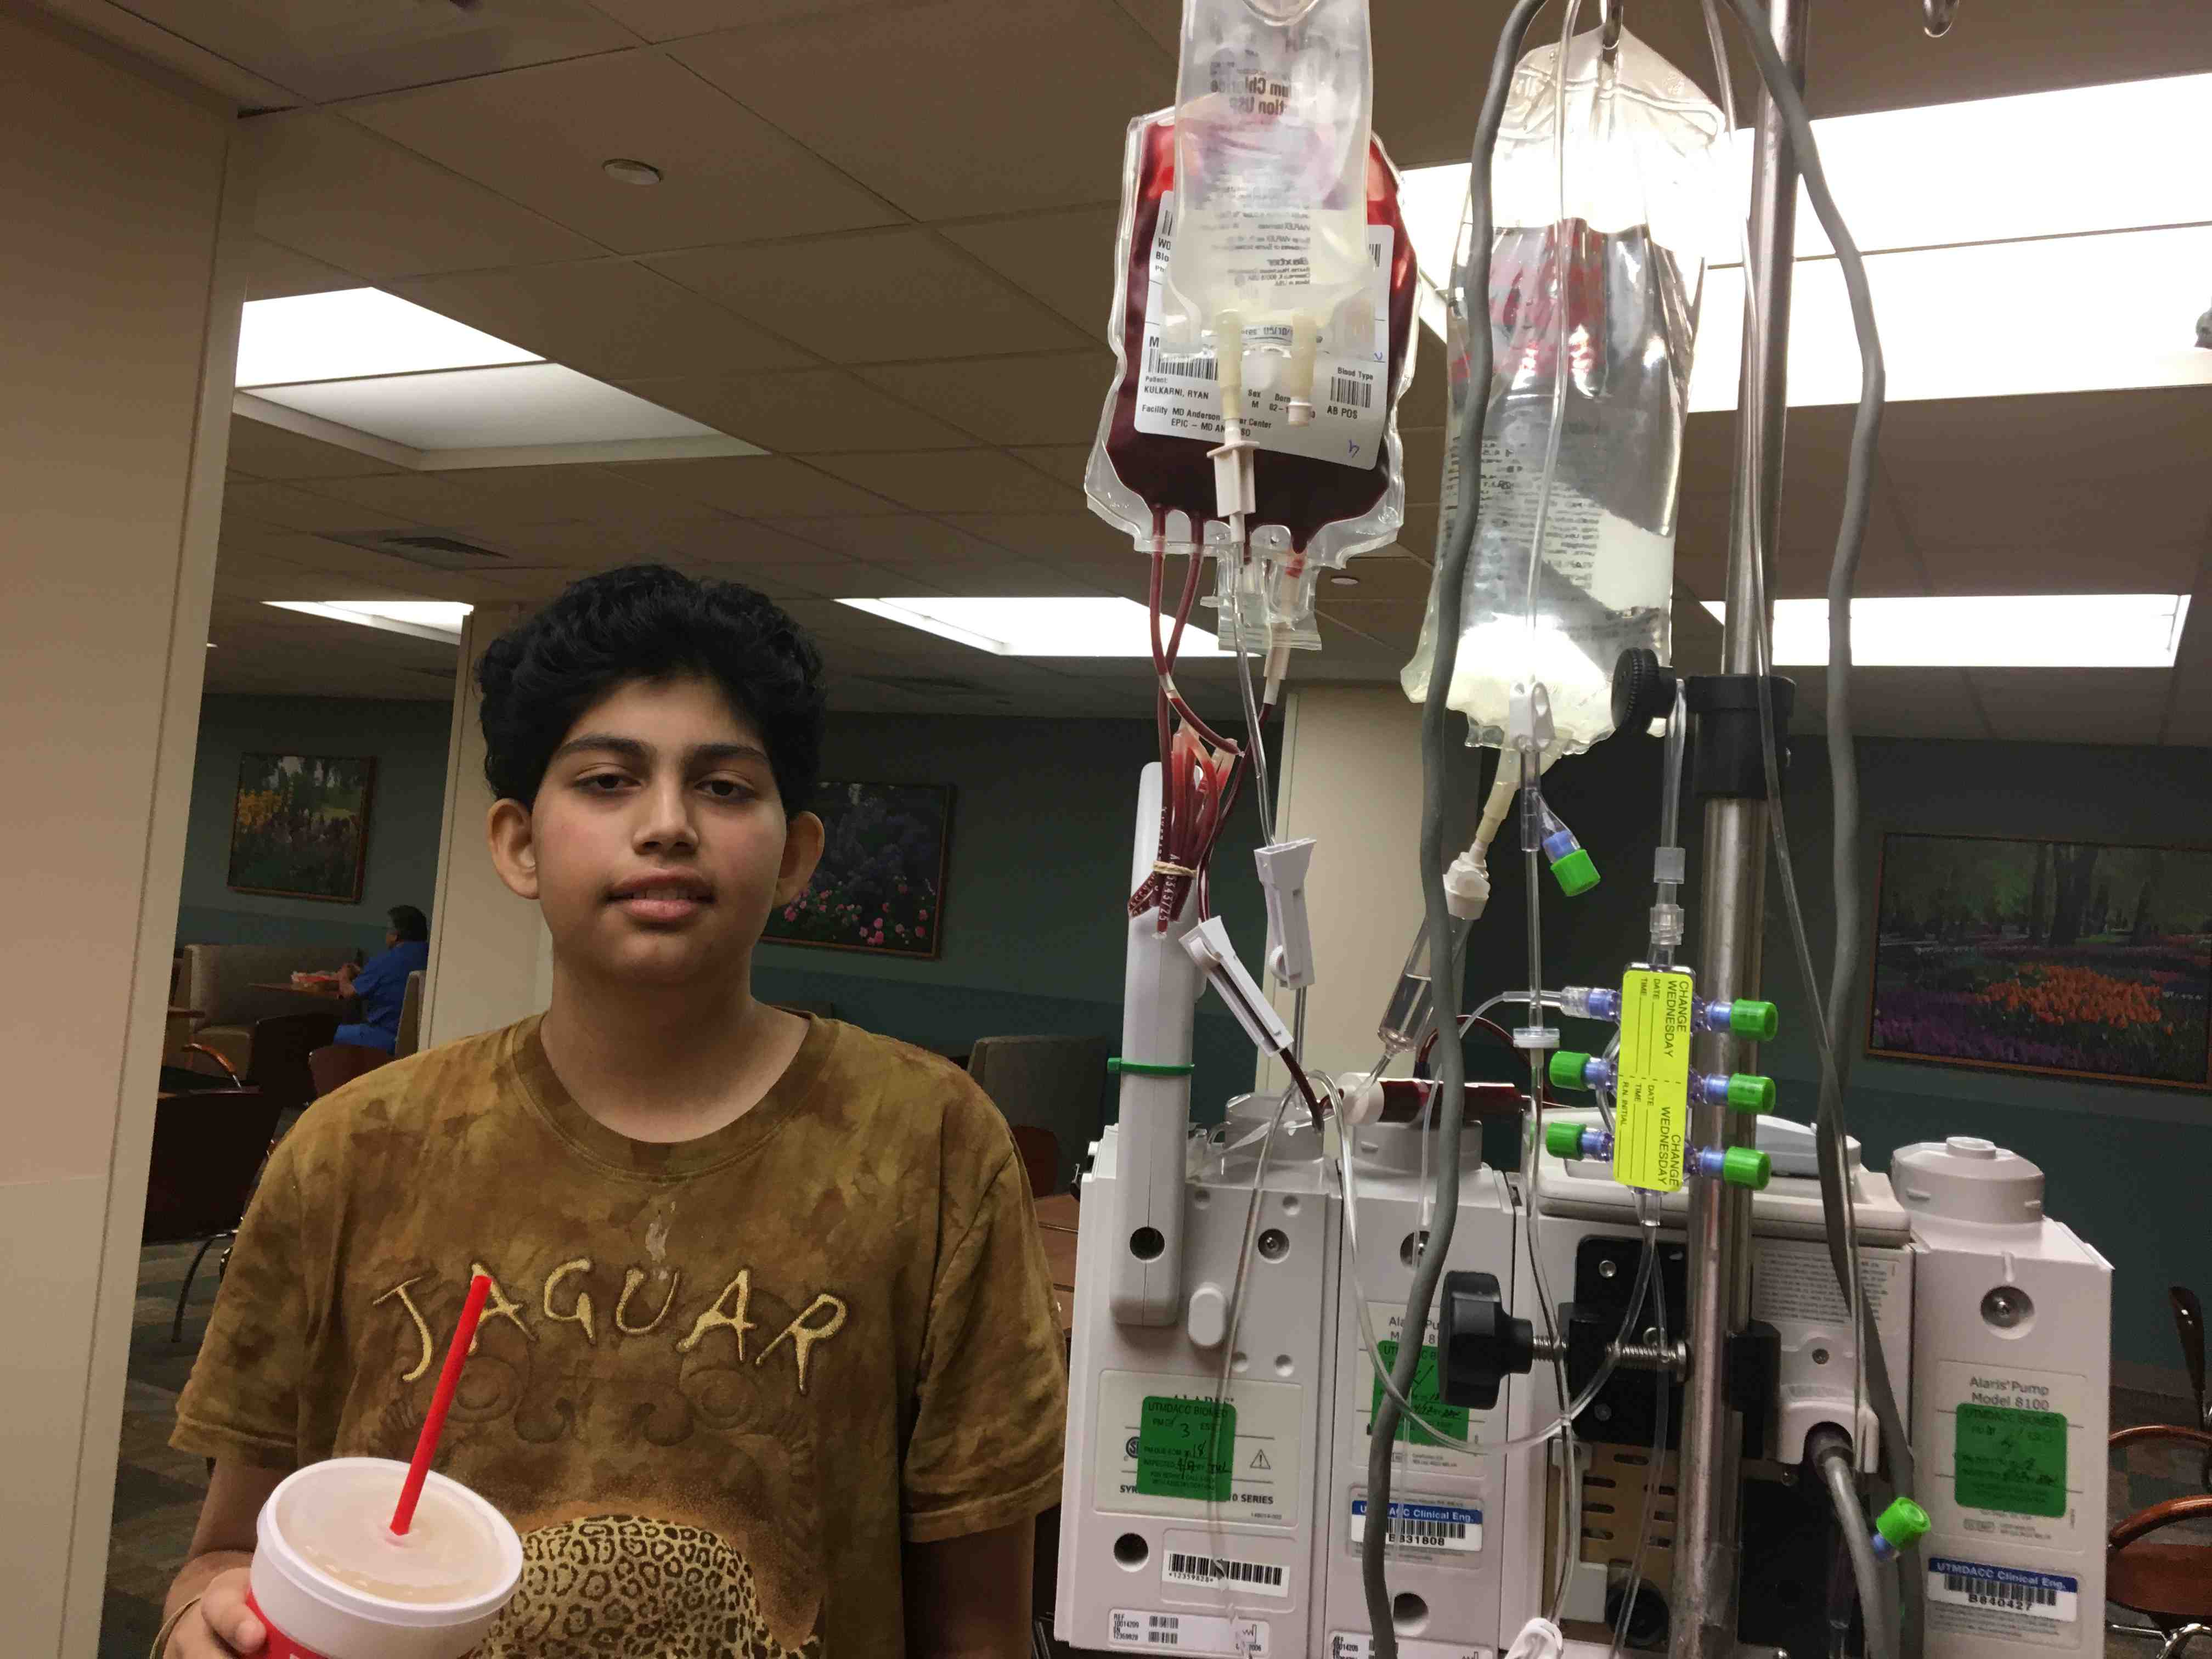 Ryan Receiving A Blood Transfusion